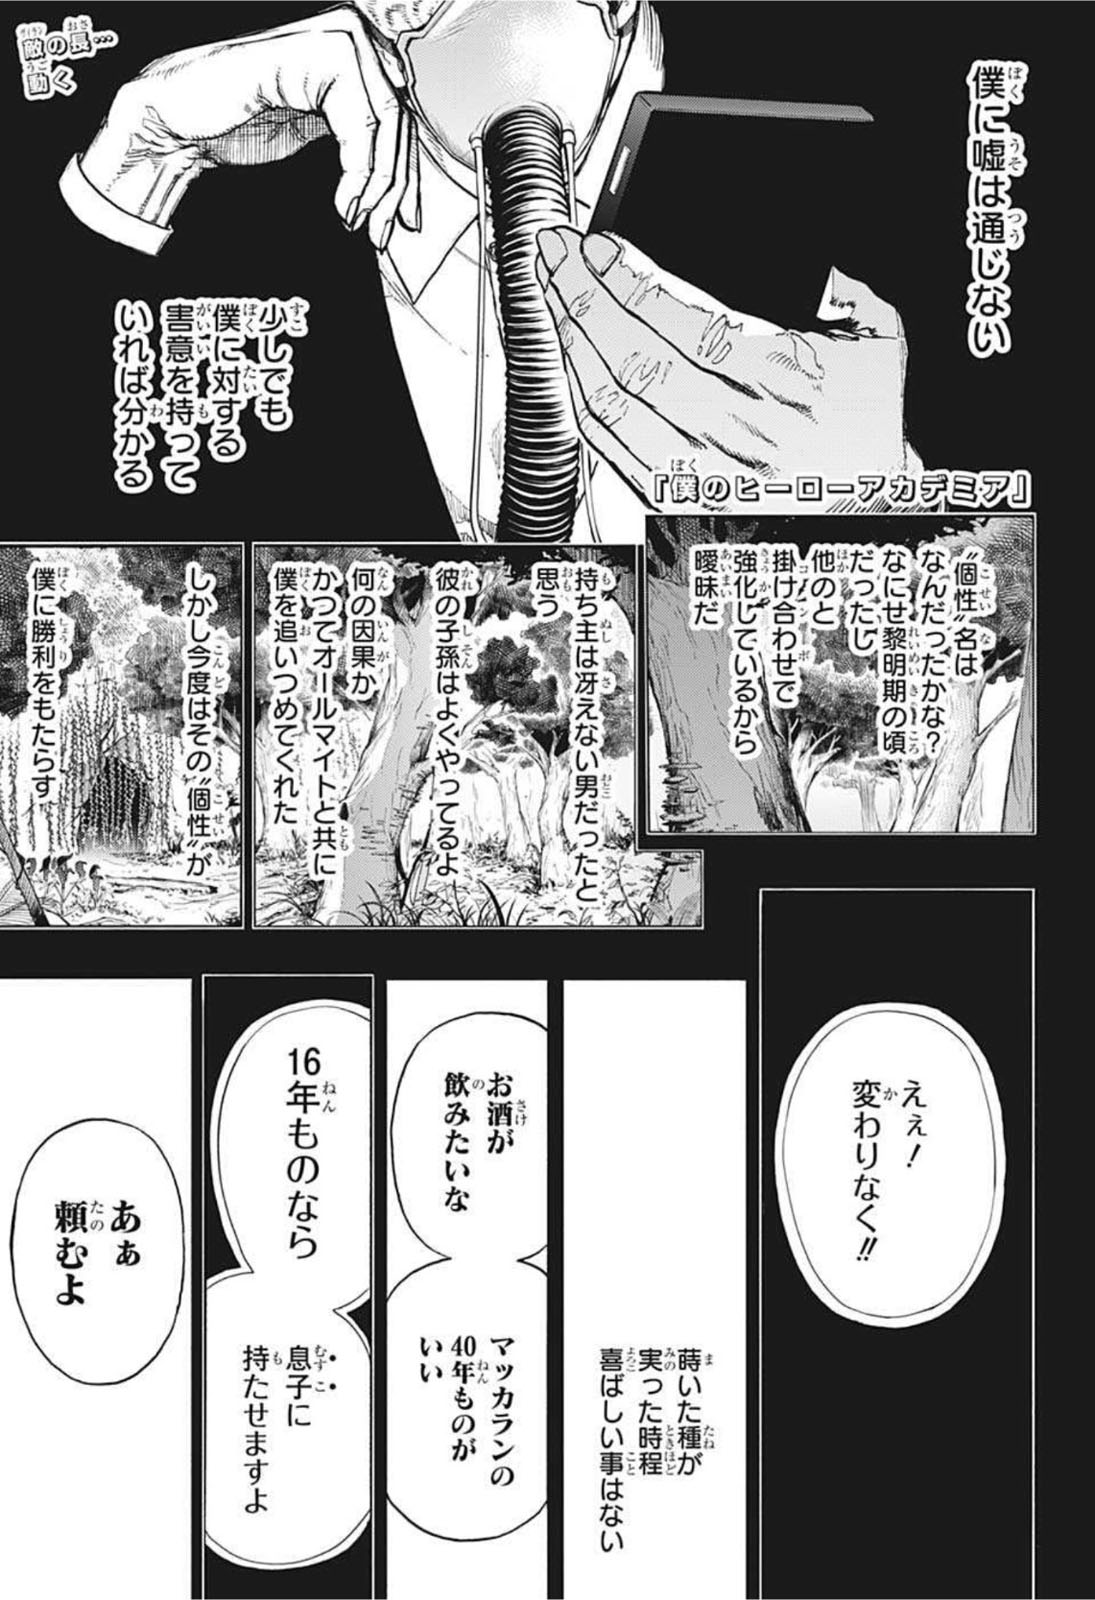 Boku no Hero Academia - Chapter 343 - Page 1